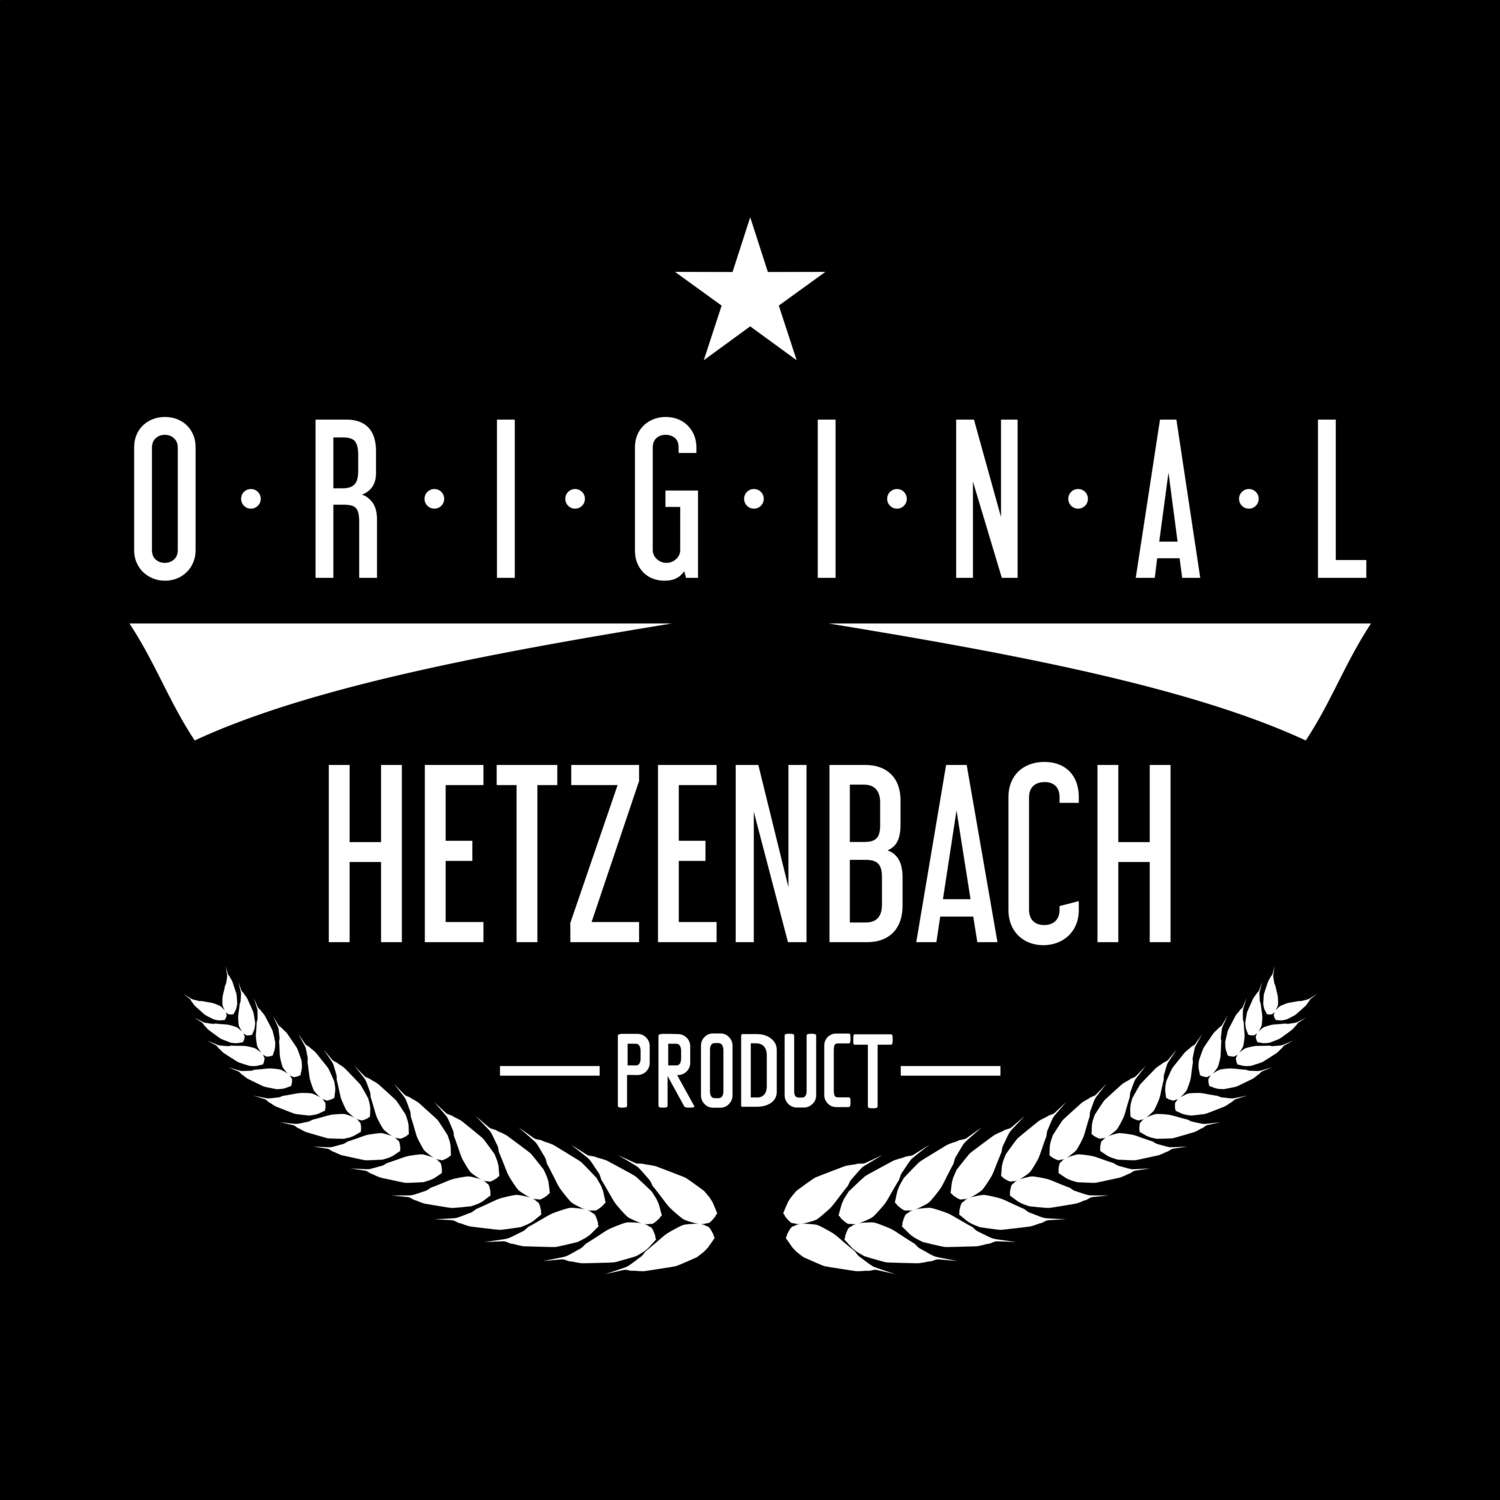 Hetzenbach T-Shirt »Original Product«